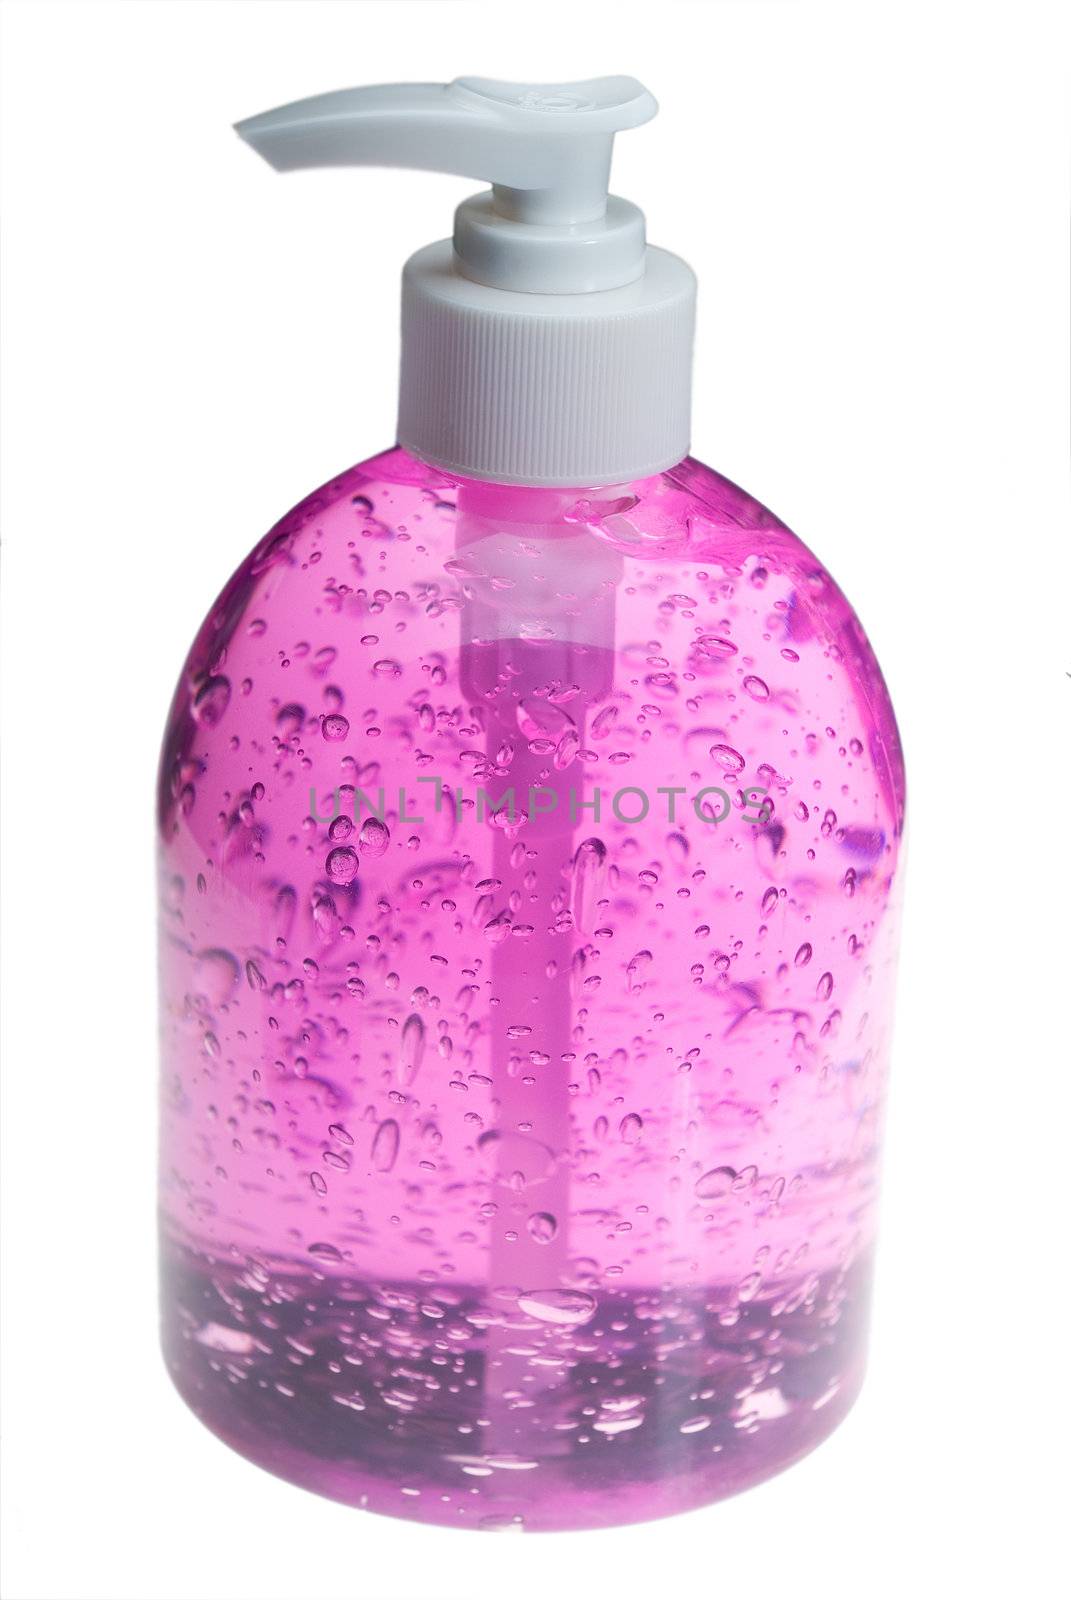 pink hair gel bottle over white by keko64